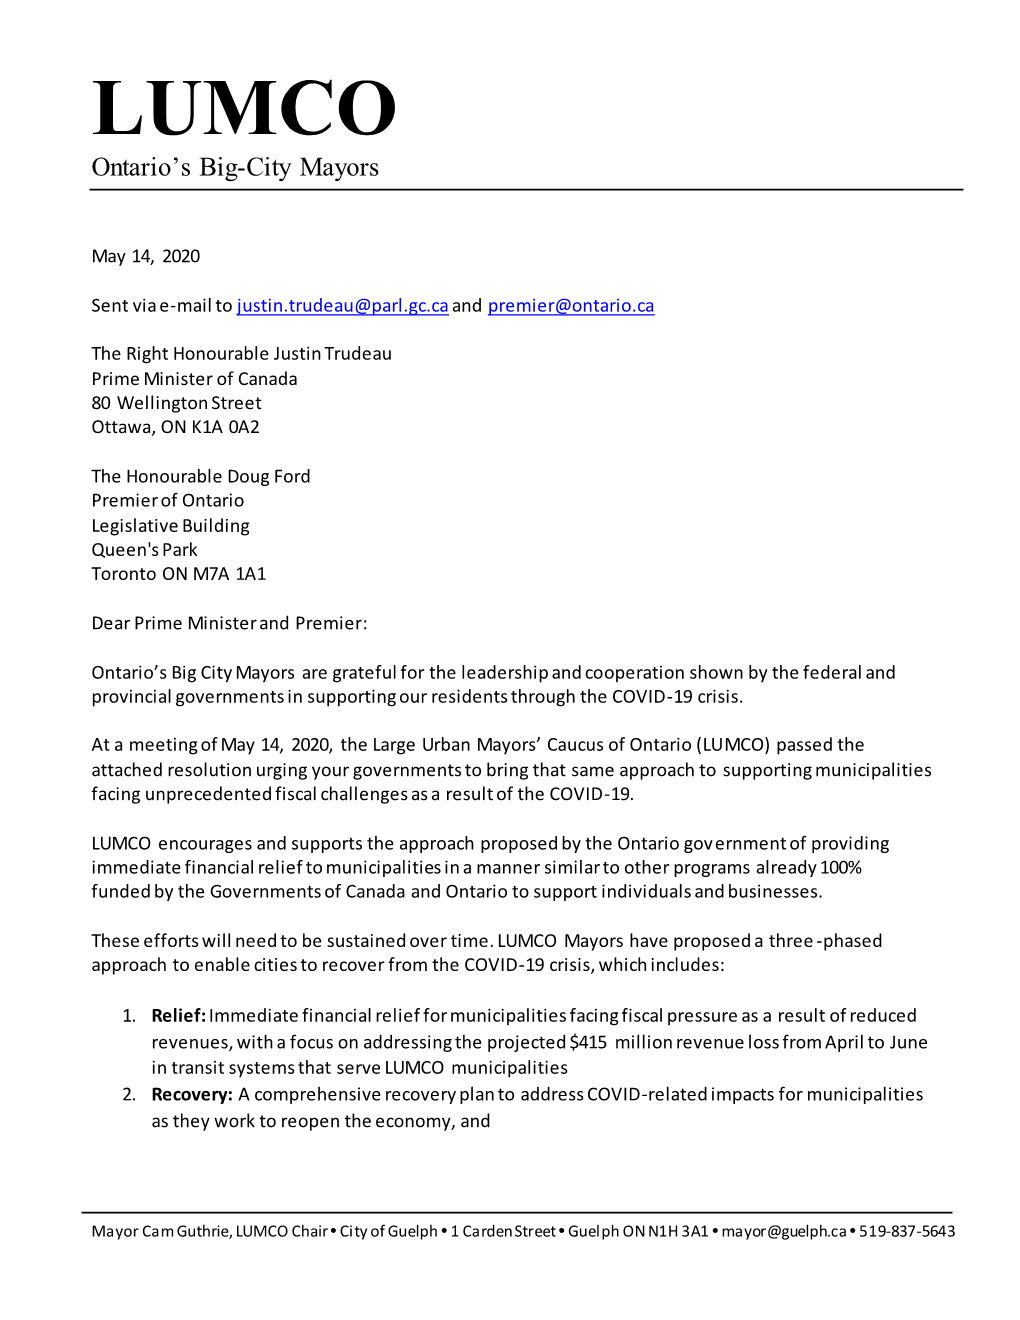 LUMCO Ontario's Big-City Mayors Letter to Prime